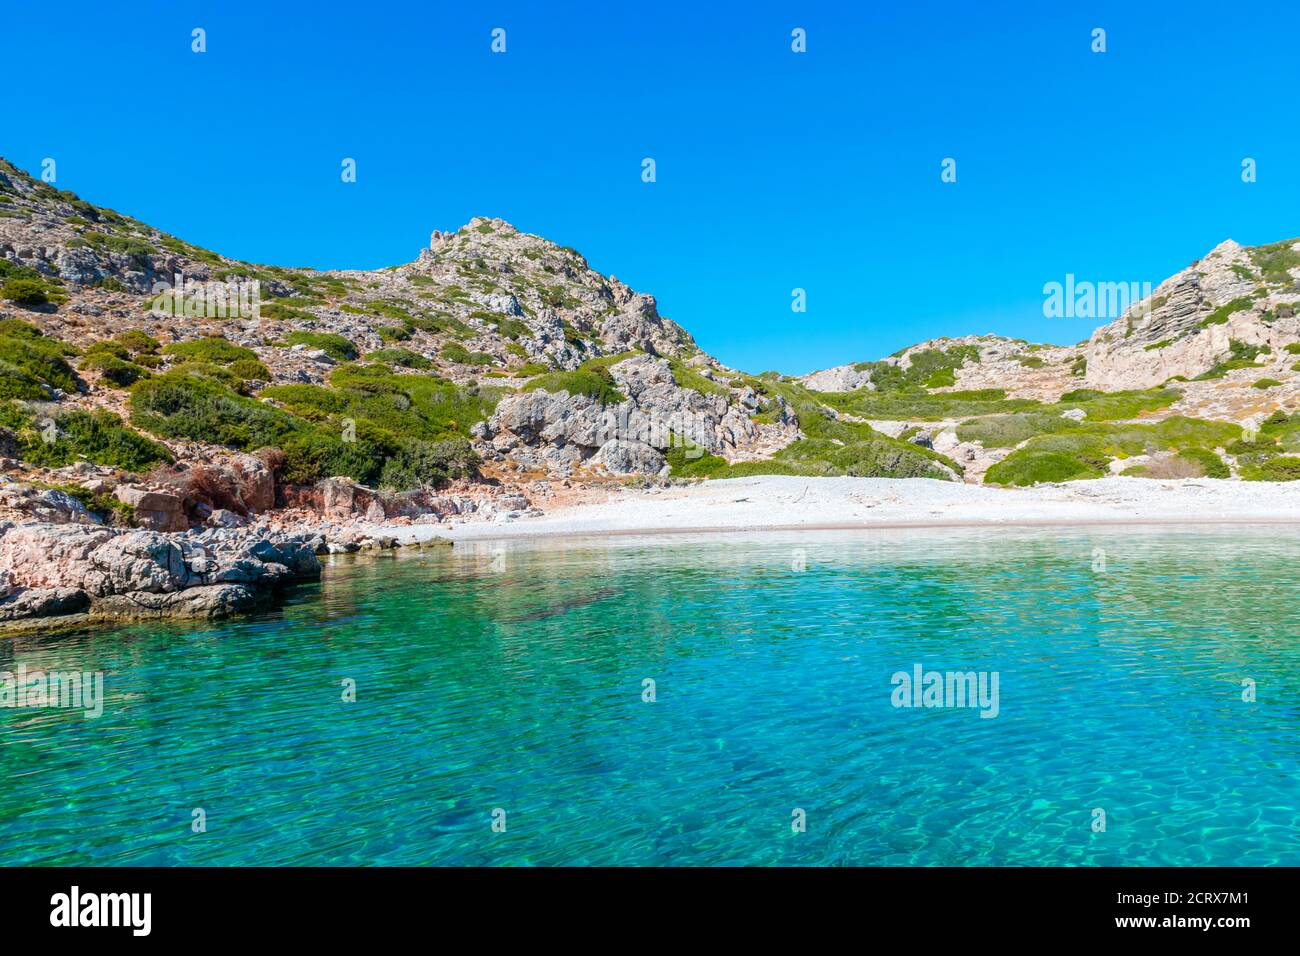 Alymounta, secluded beach with crystal clear turquoise sea on Saria Island, Karpathos Island, Greece Stock Photo